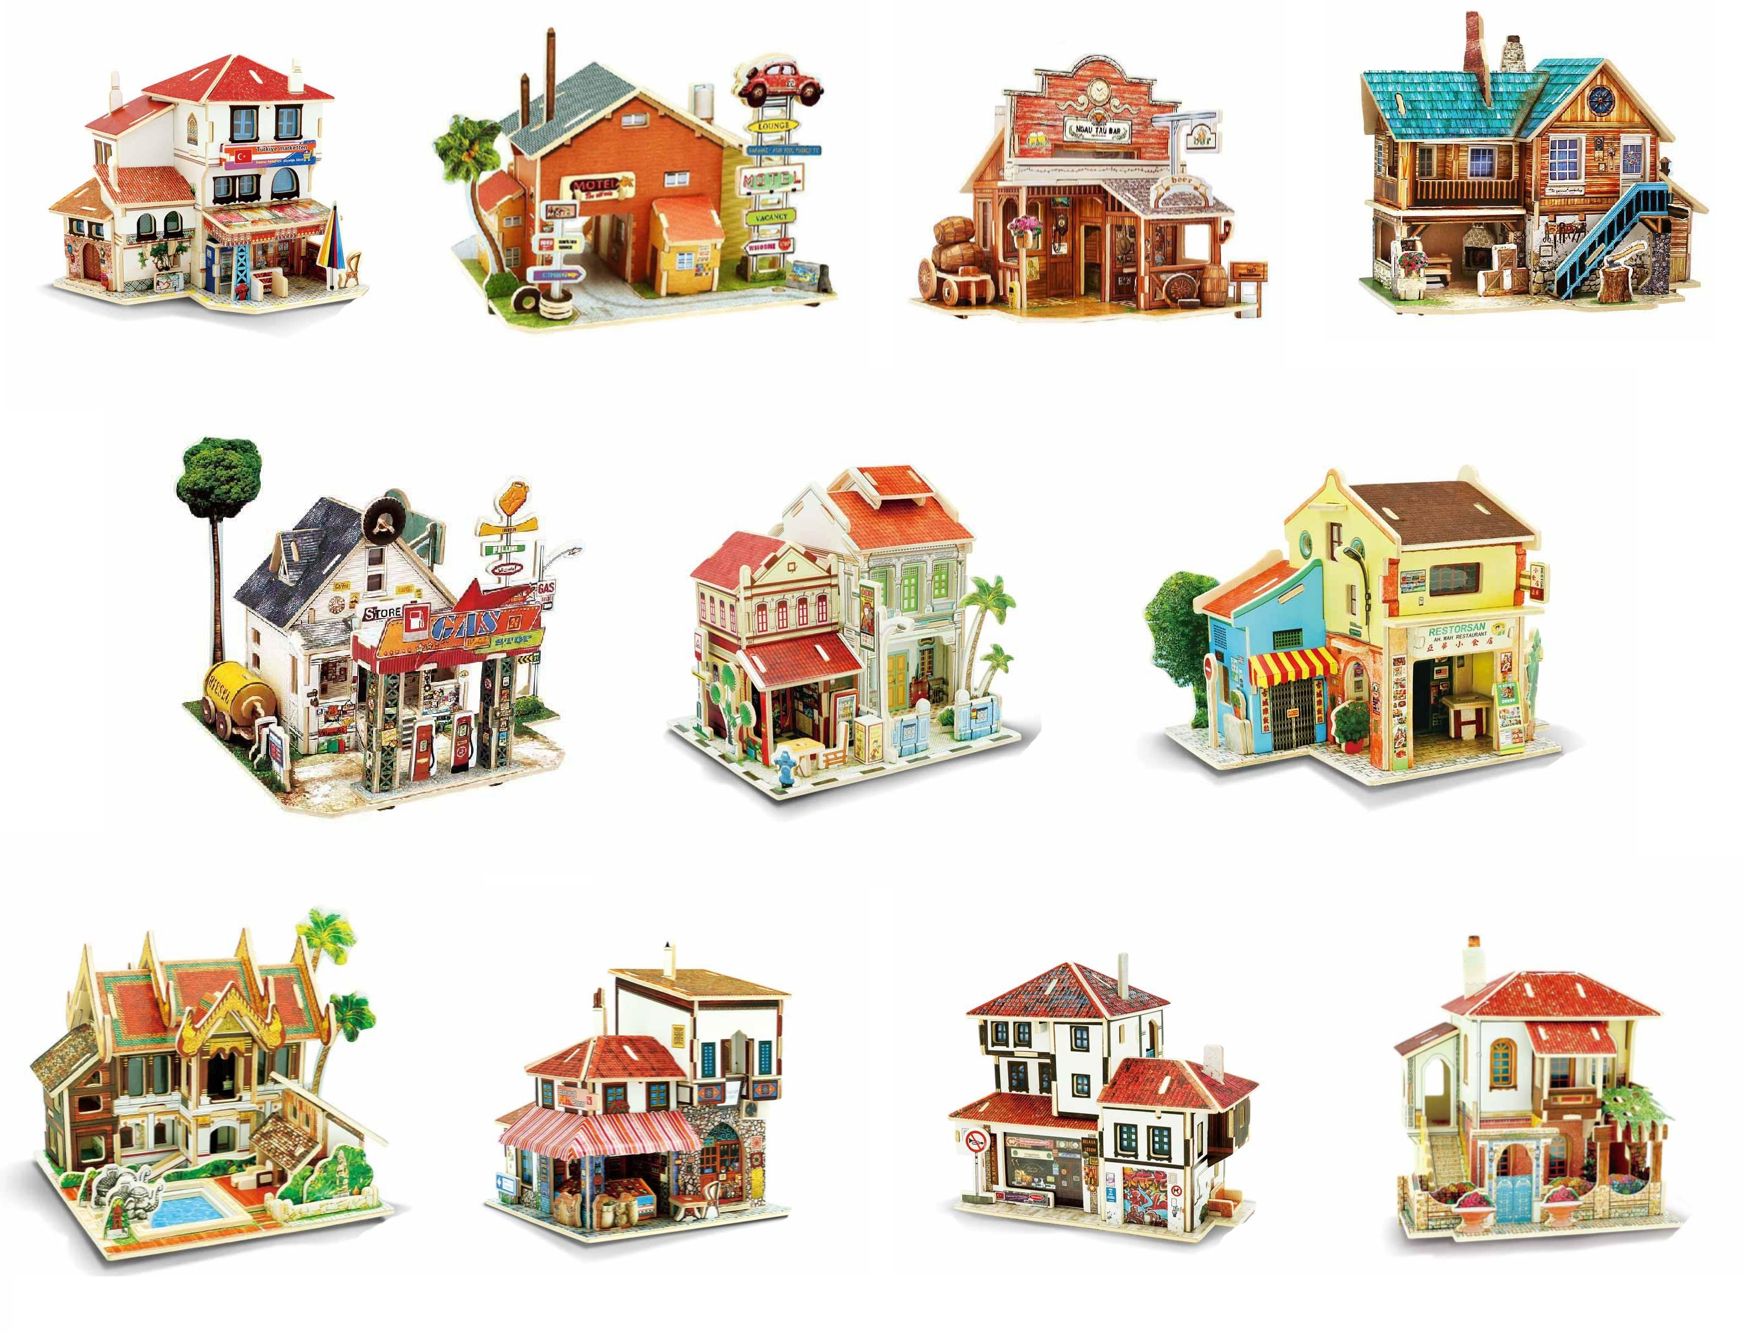 3D Colorful Wooden Houses Puzzle Models